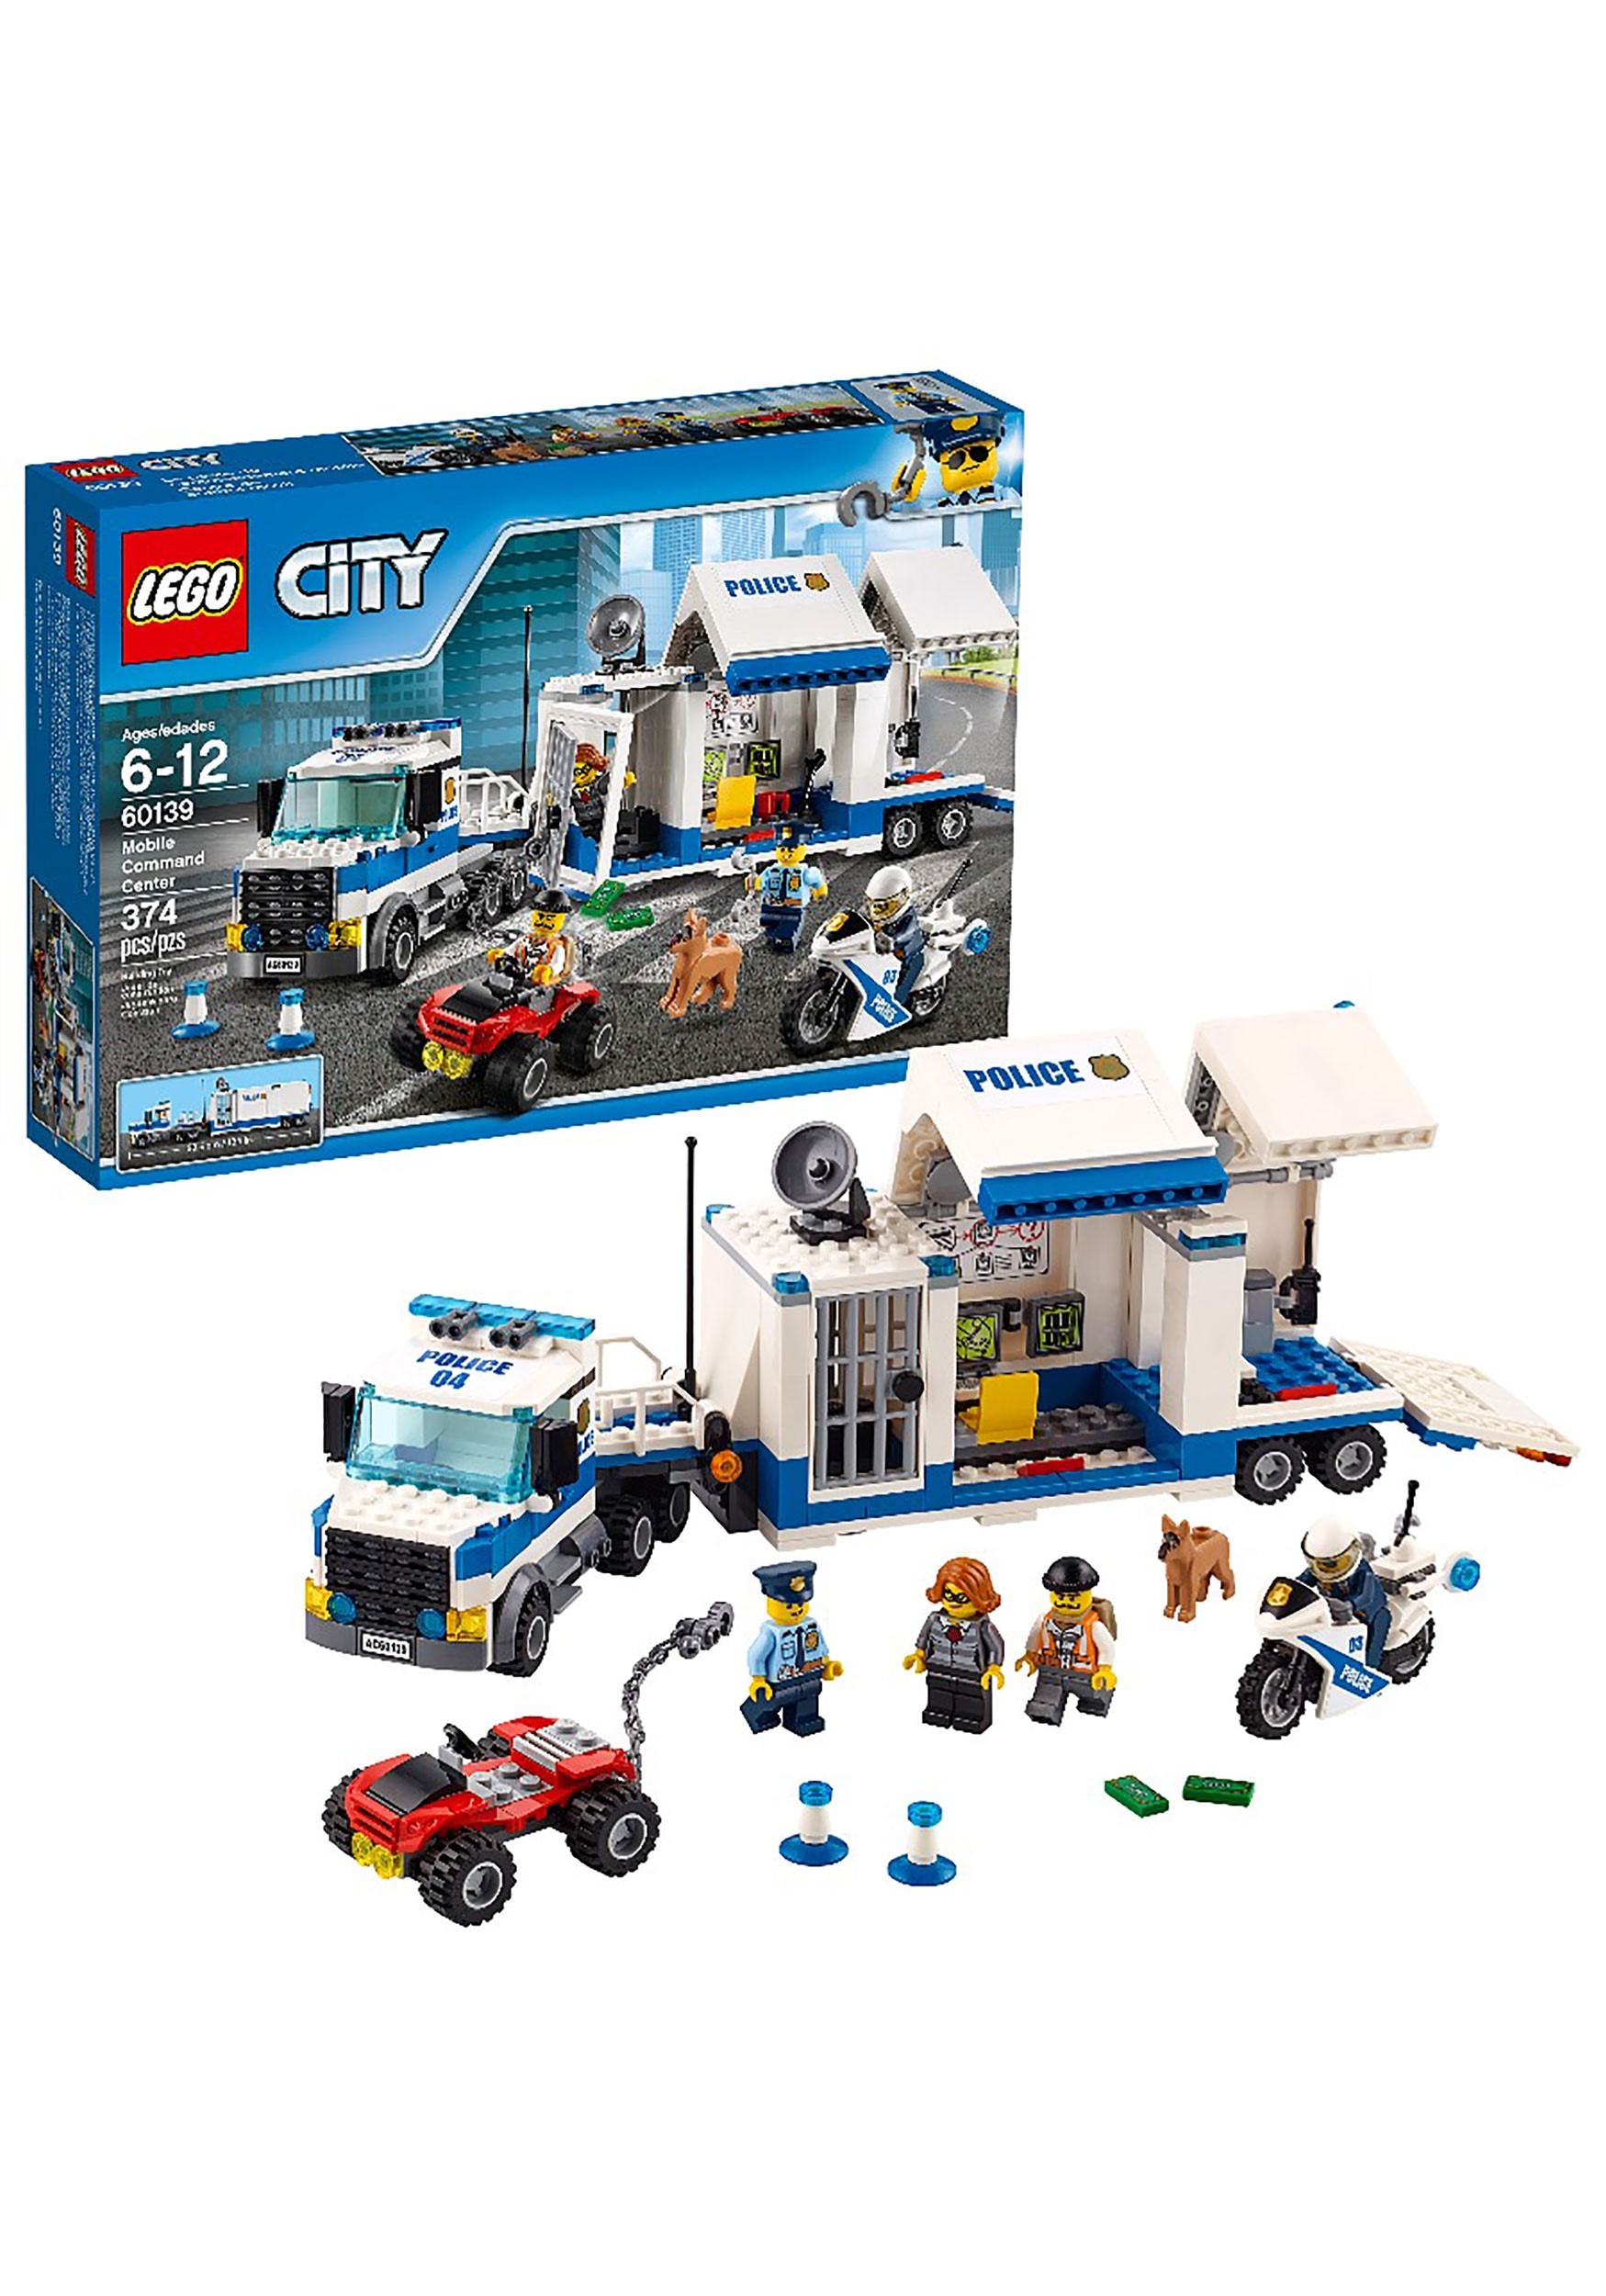 Police Mobile Command Center LEGO City Building Set